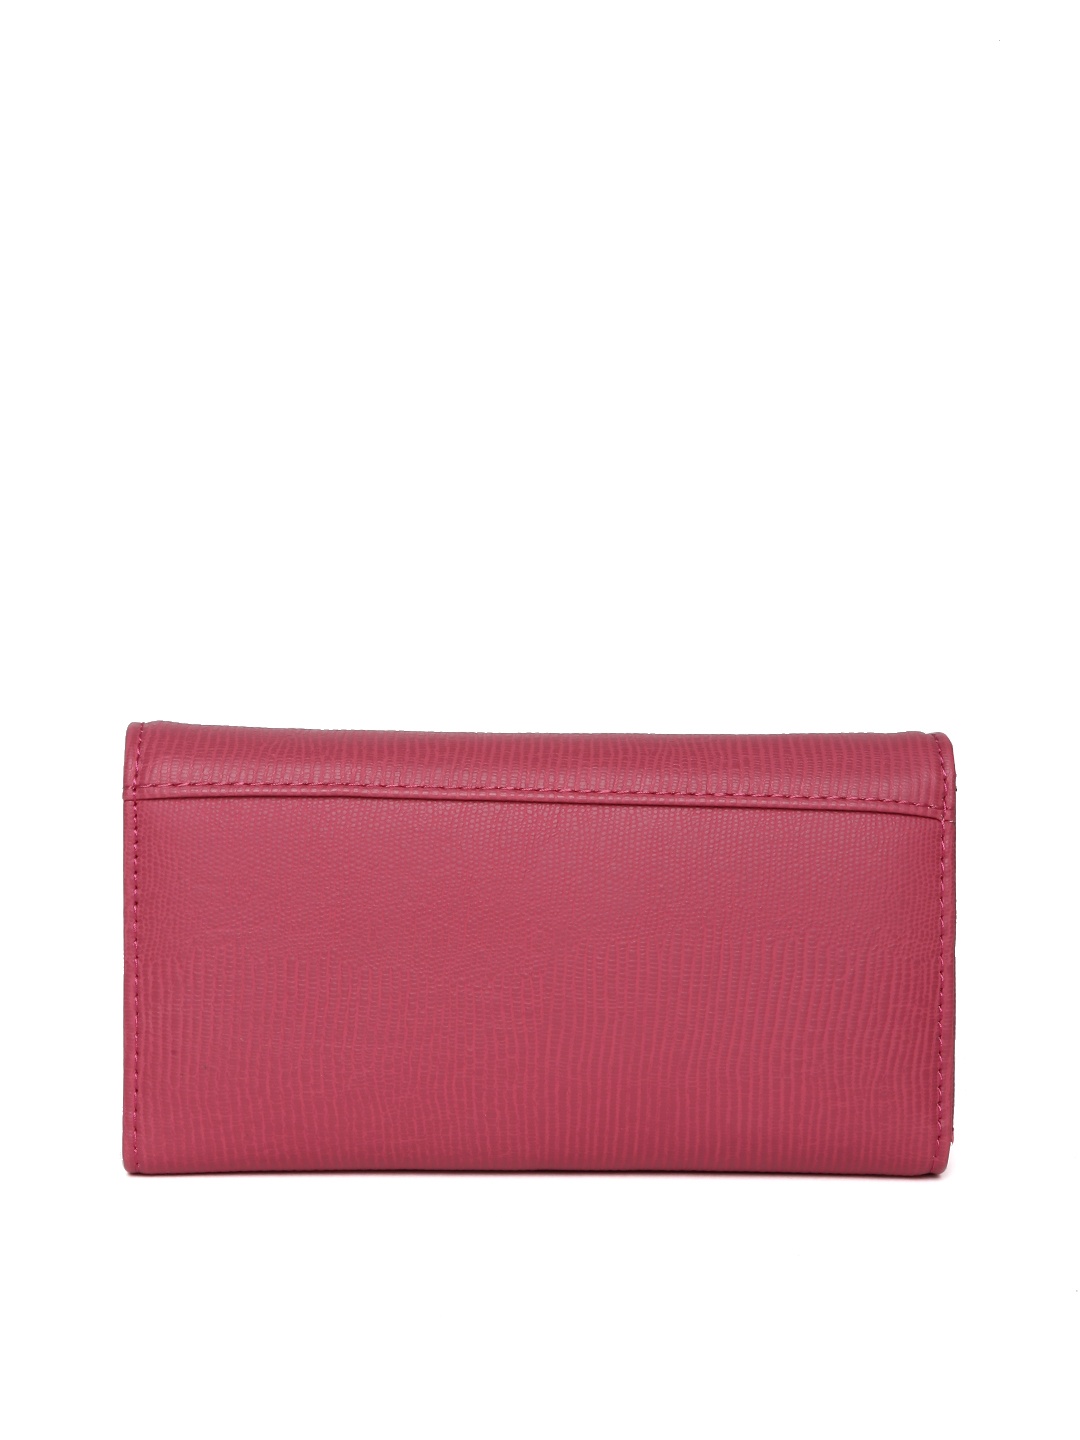 Myntra Parfois Women Pink Wallet 790072 | Buy Myntra Parfois Wallets at ...